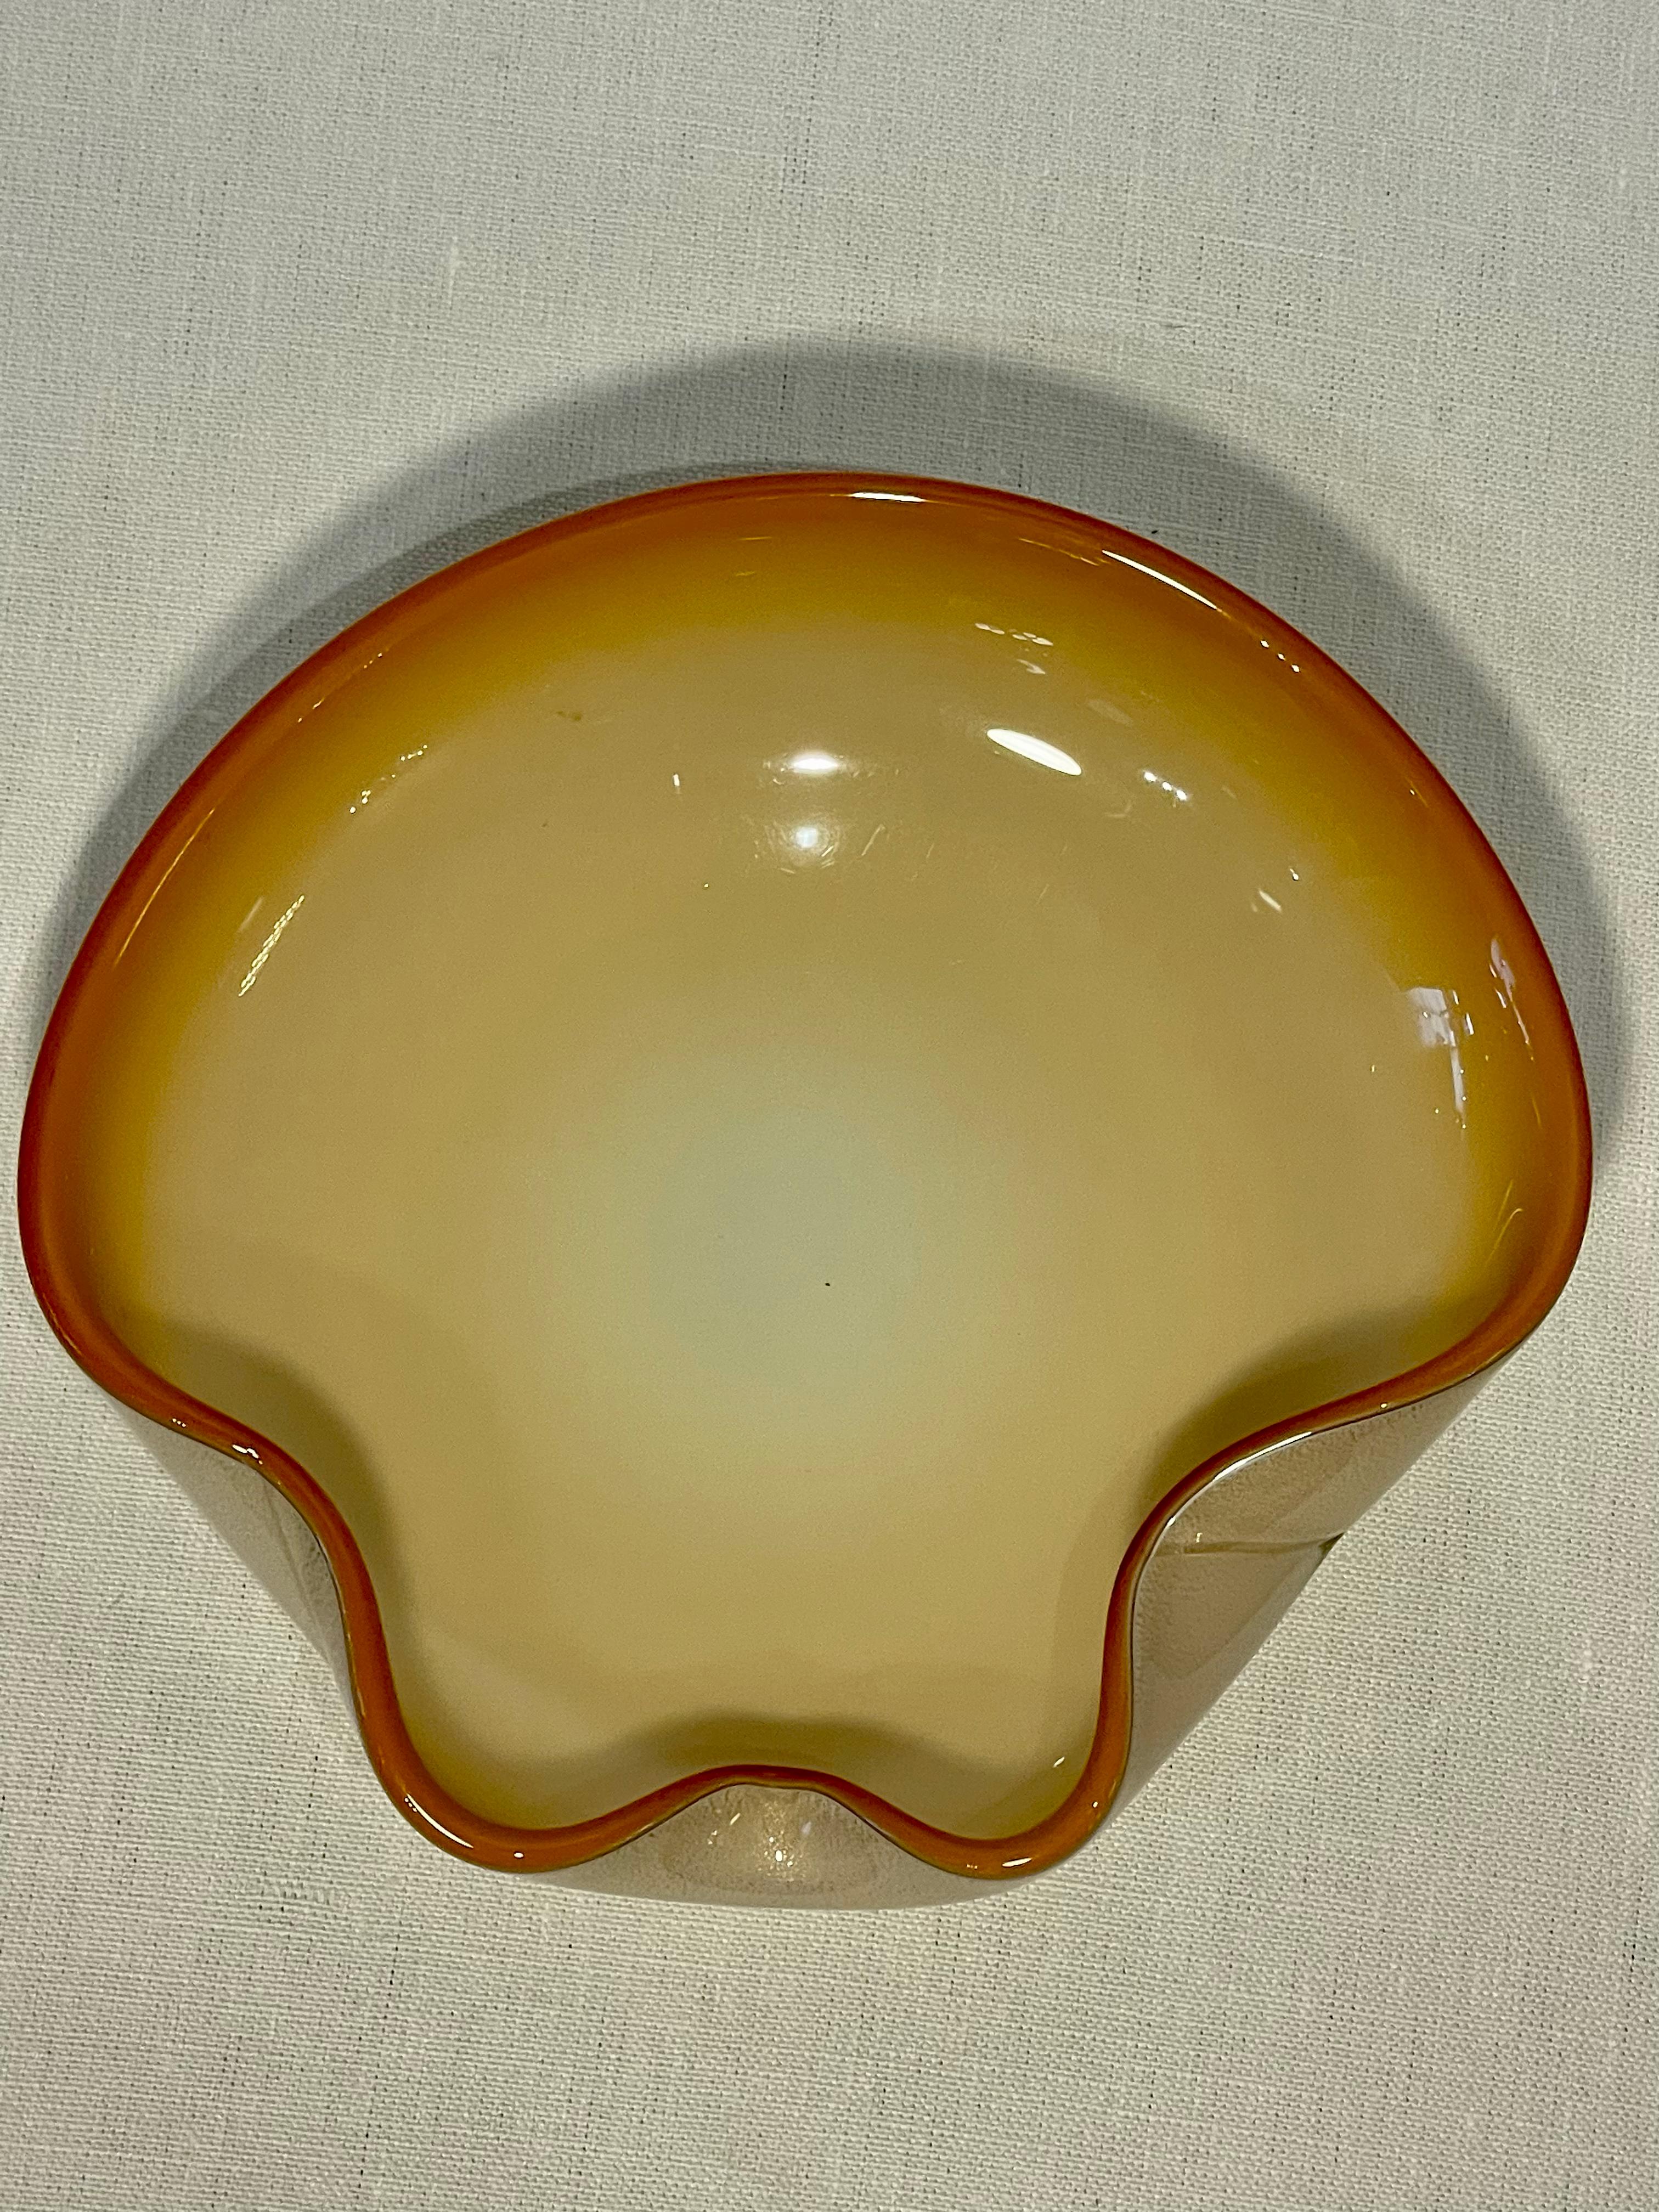 Vintage hand-blown Murano glass 
Scalloped edges
Freeform tangerine dish

